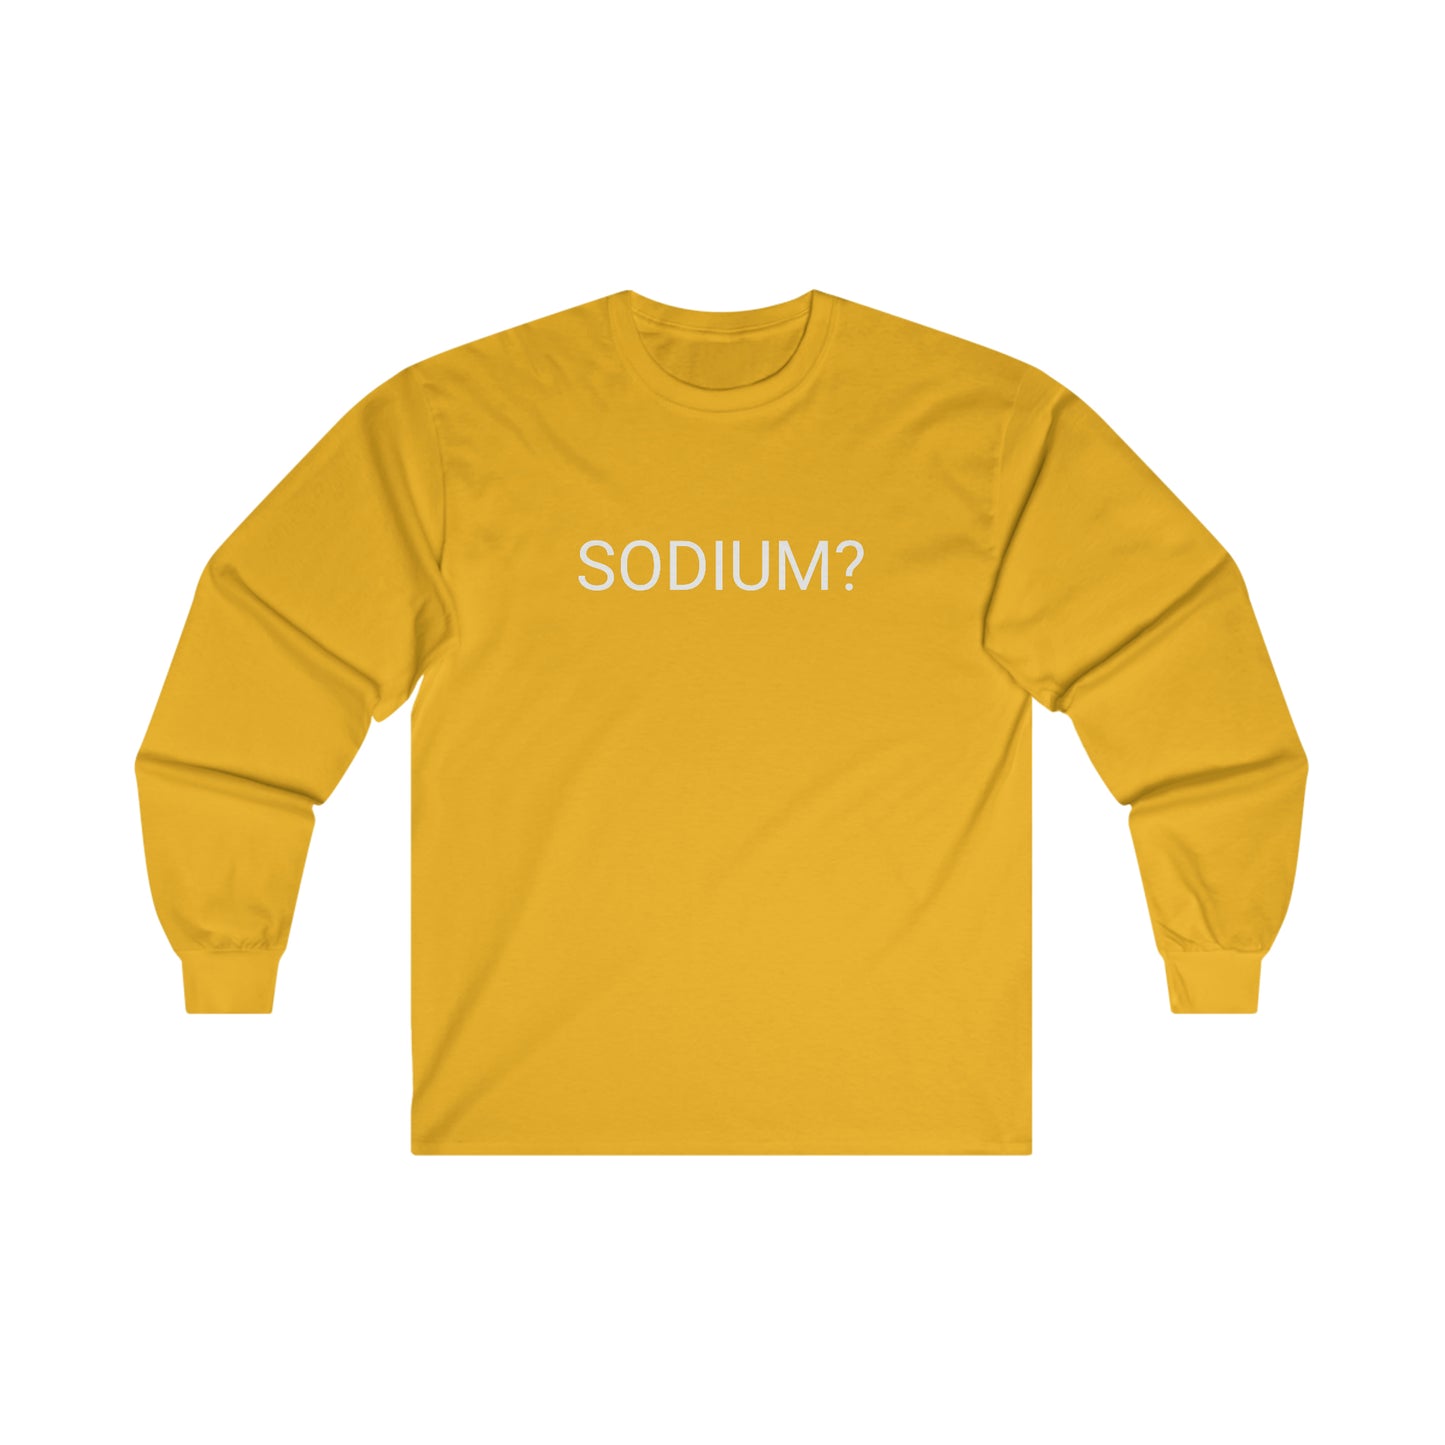 SODIUM? yellow long sleeve